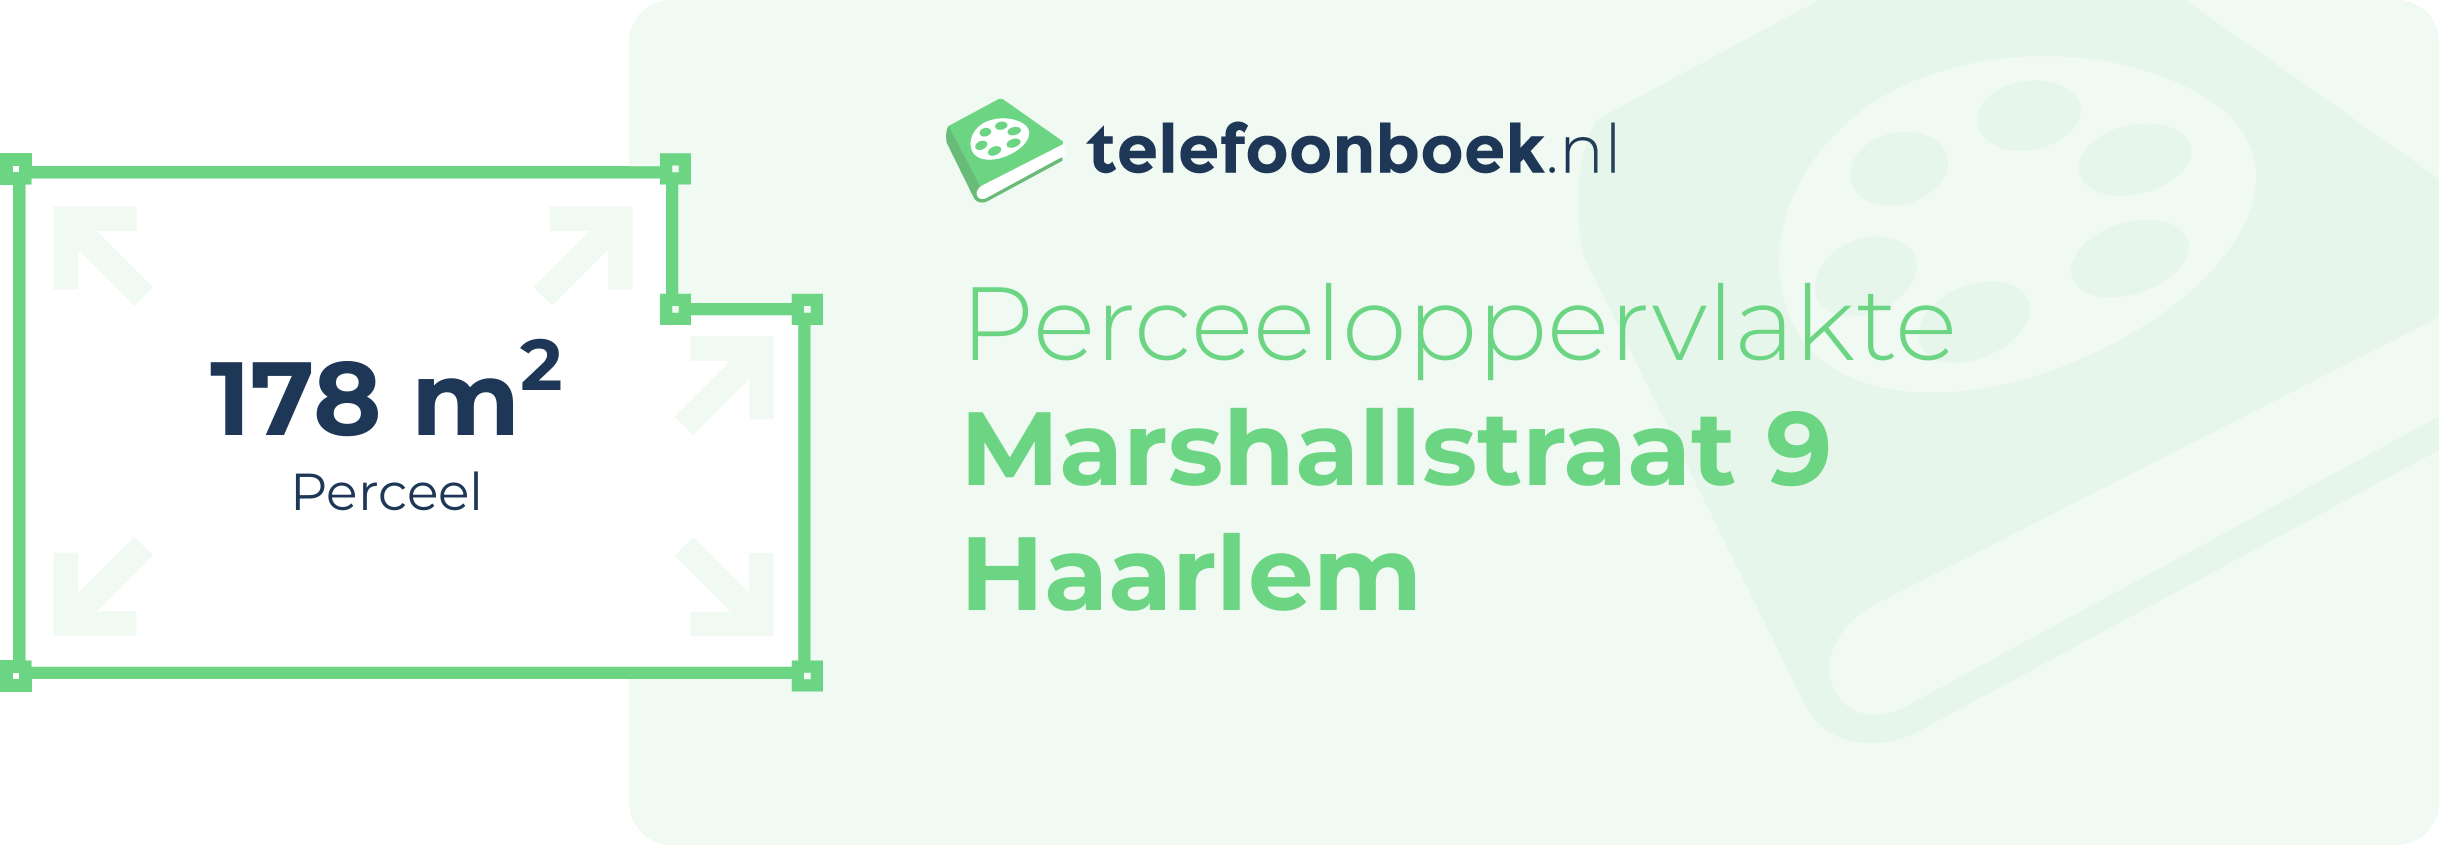 Perceeloppervlakte Marshallstraat 9 Haarlem